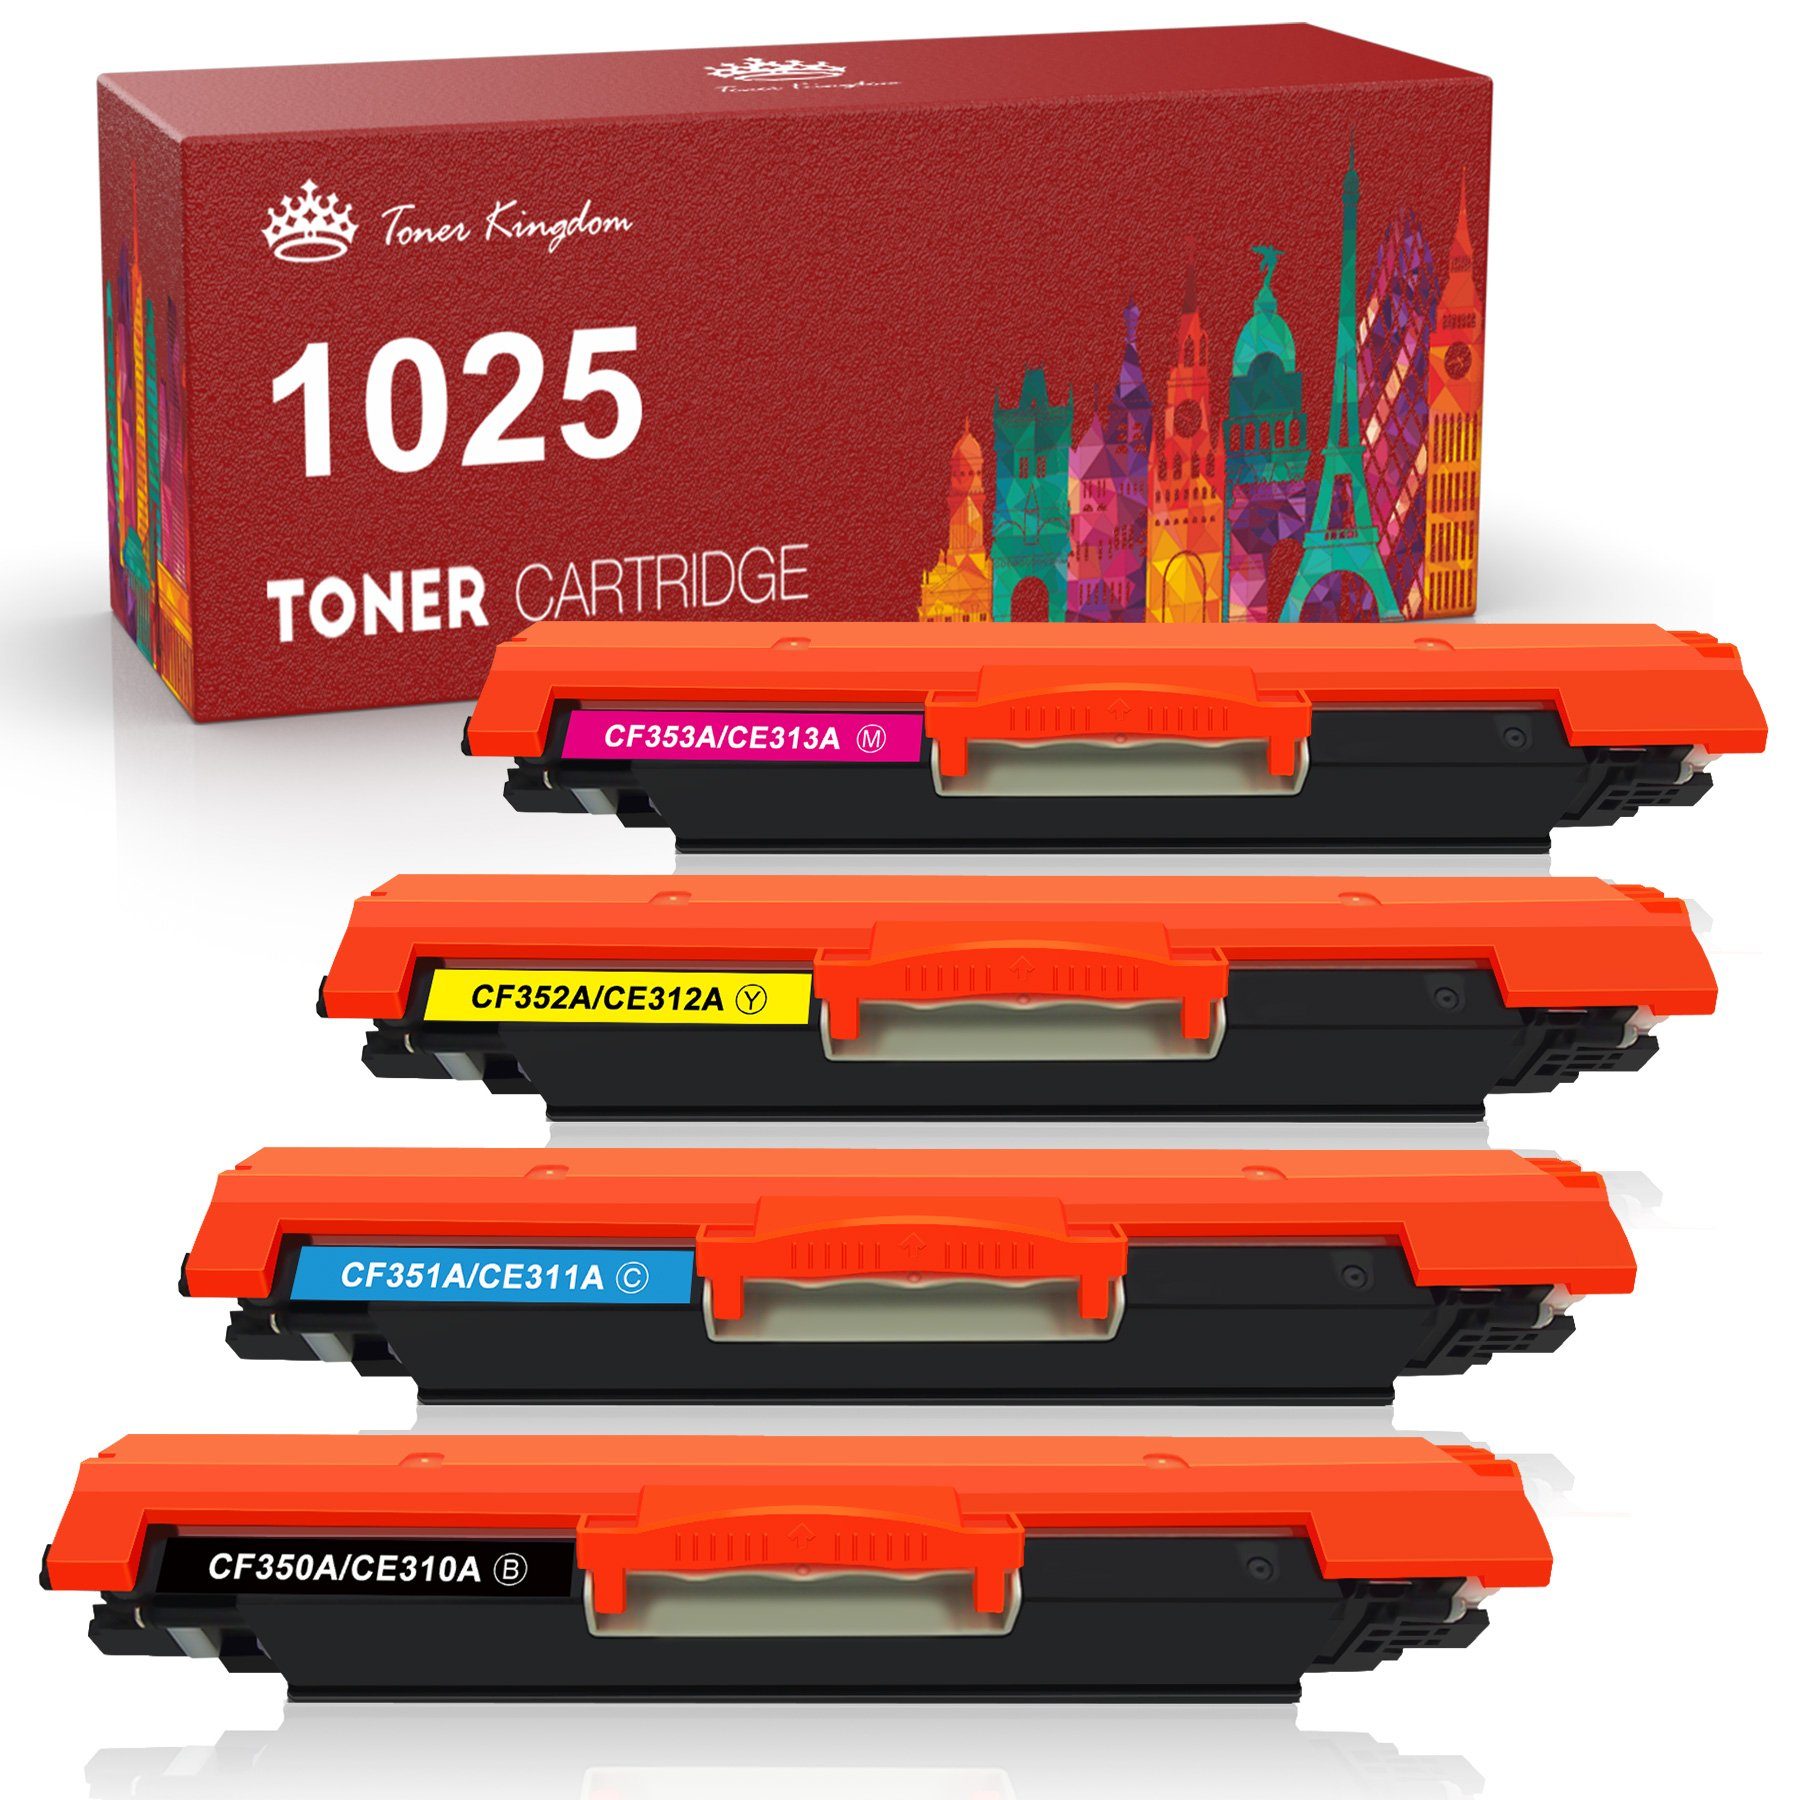 Toner Kingdom Tonerpatrone für HP 126A CF350A CE310A, (Color LaserJet Pro CP1025 CP1025nw), MFP M176n M177fw M175nw M175a